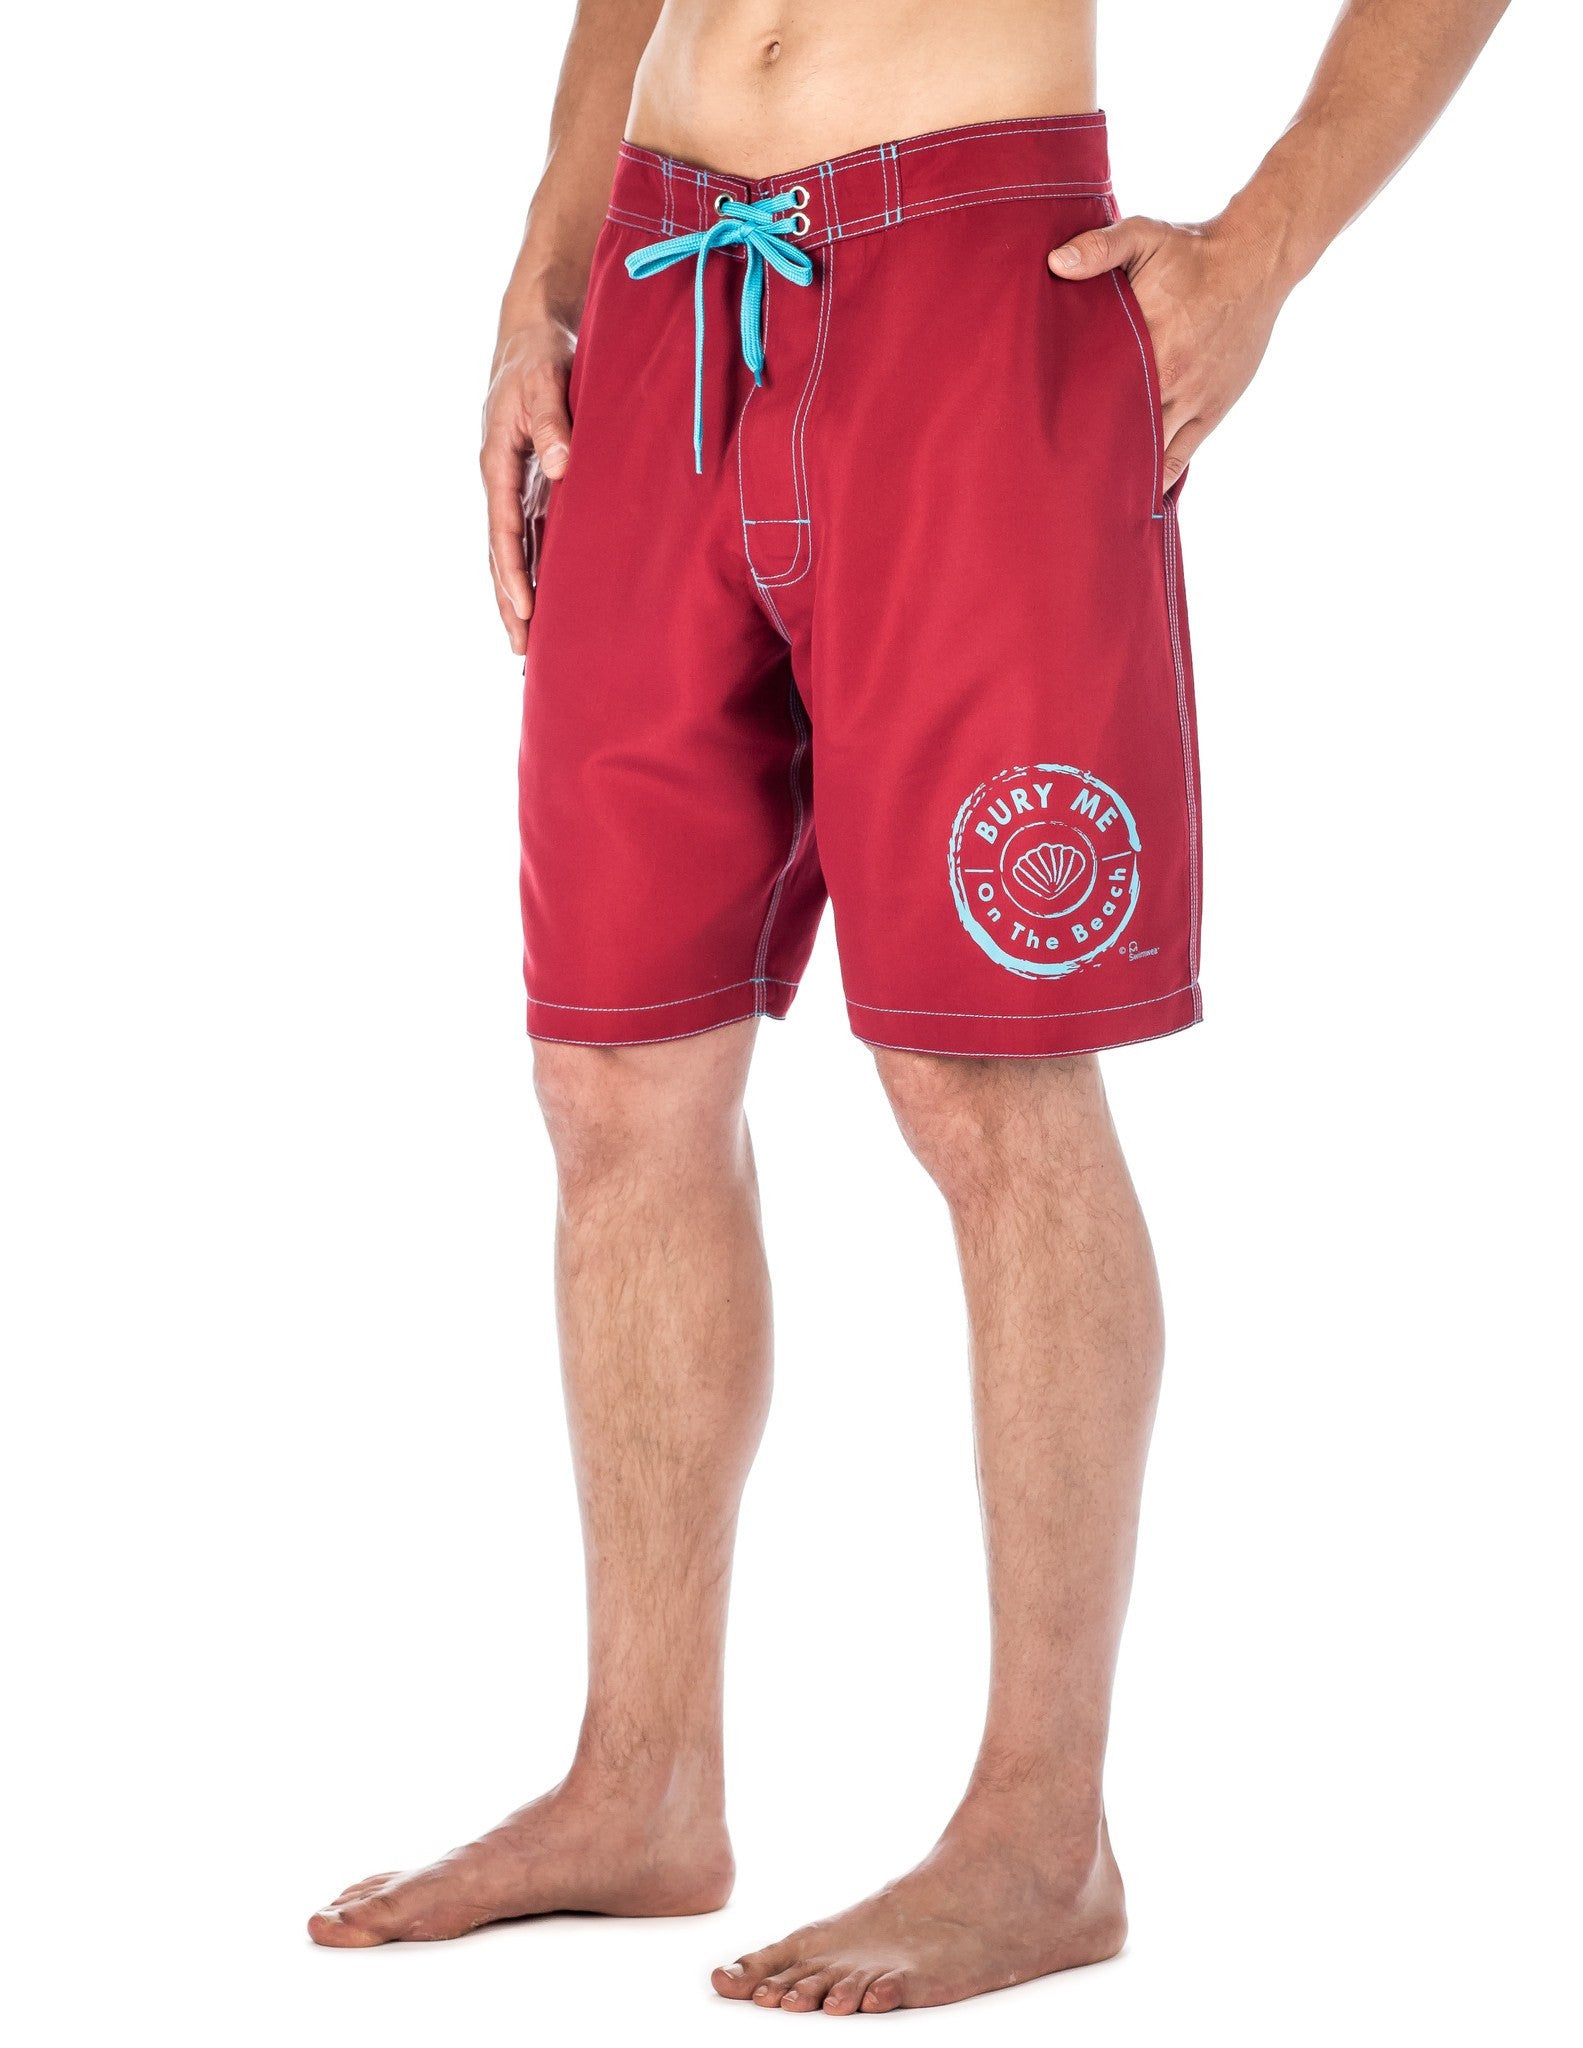 Men's Premium Swim Boardshorts - With Beach Attitude Stamps